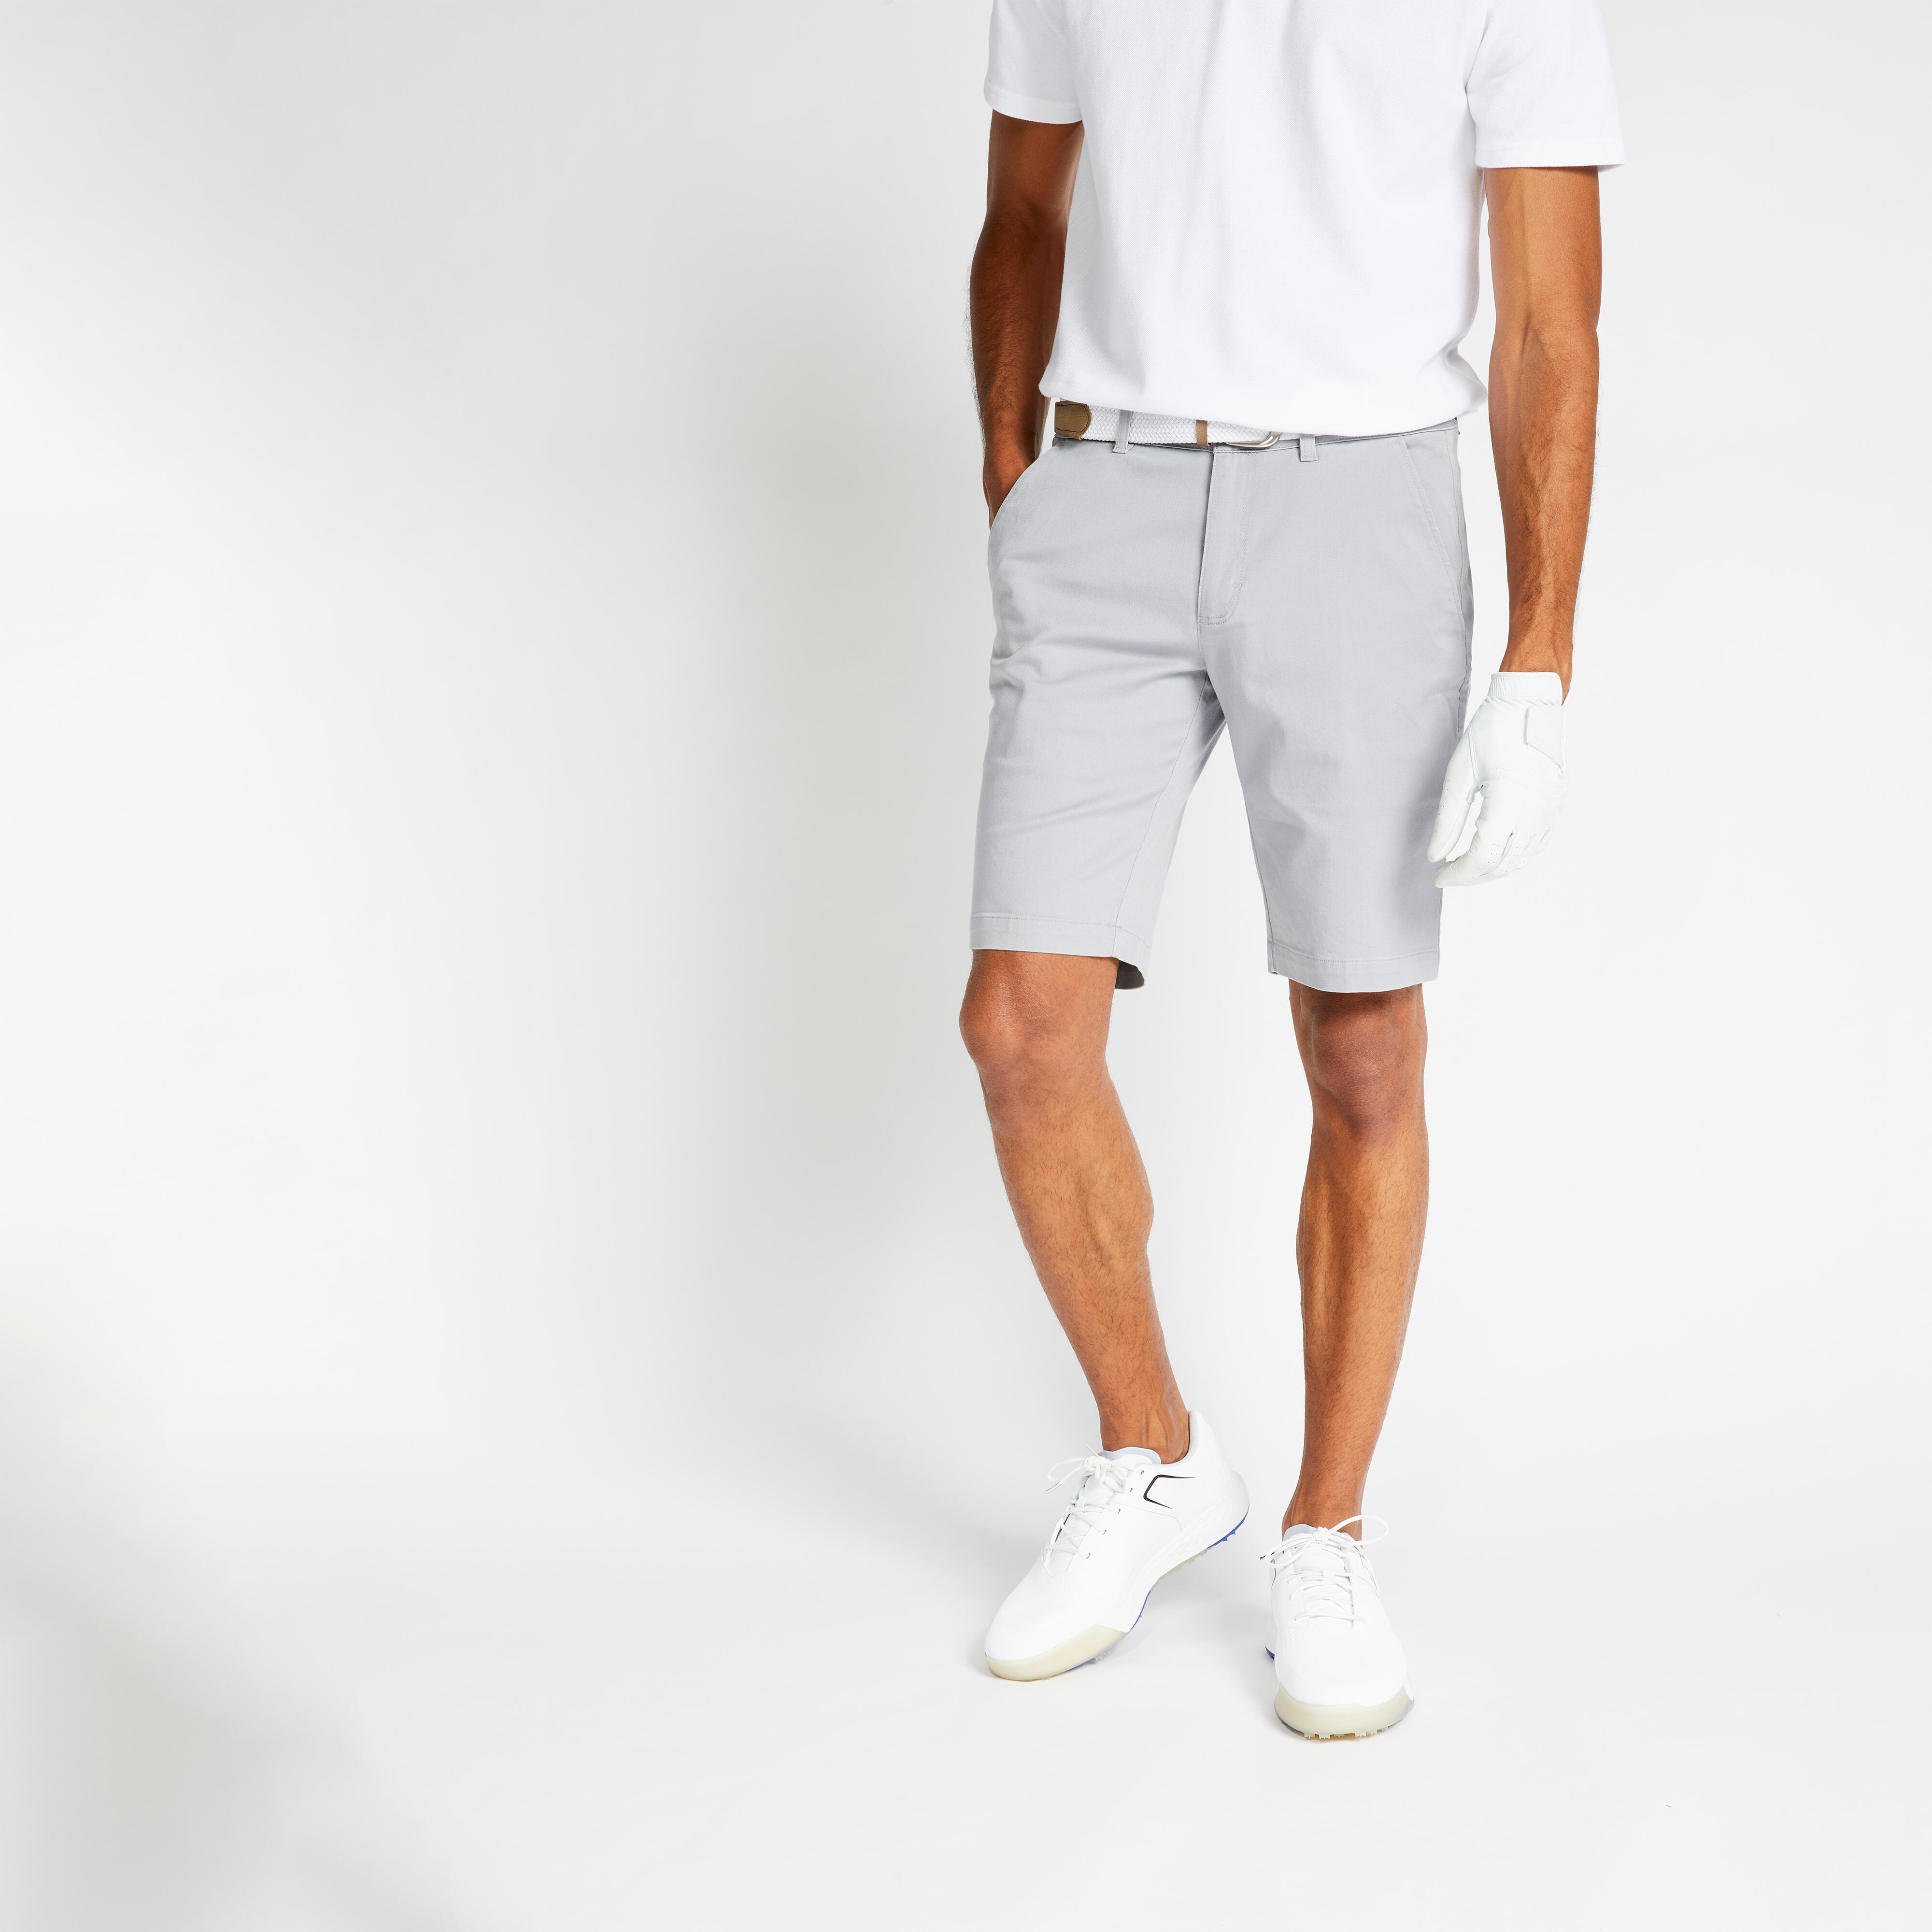 Designer Golf Shorts, Men's Golf Shorts